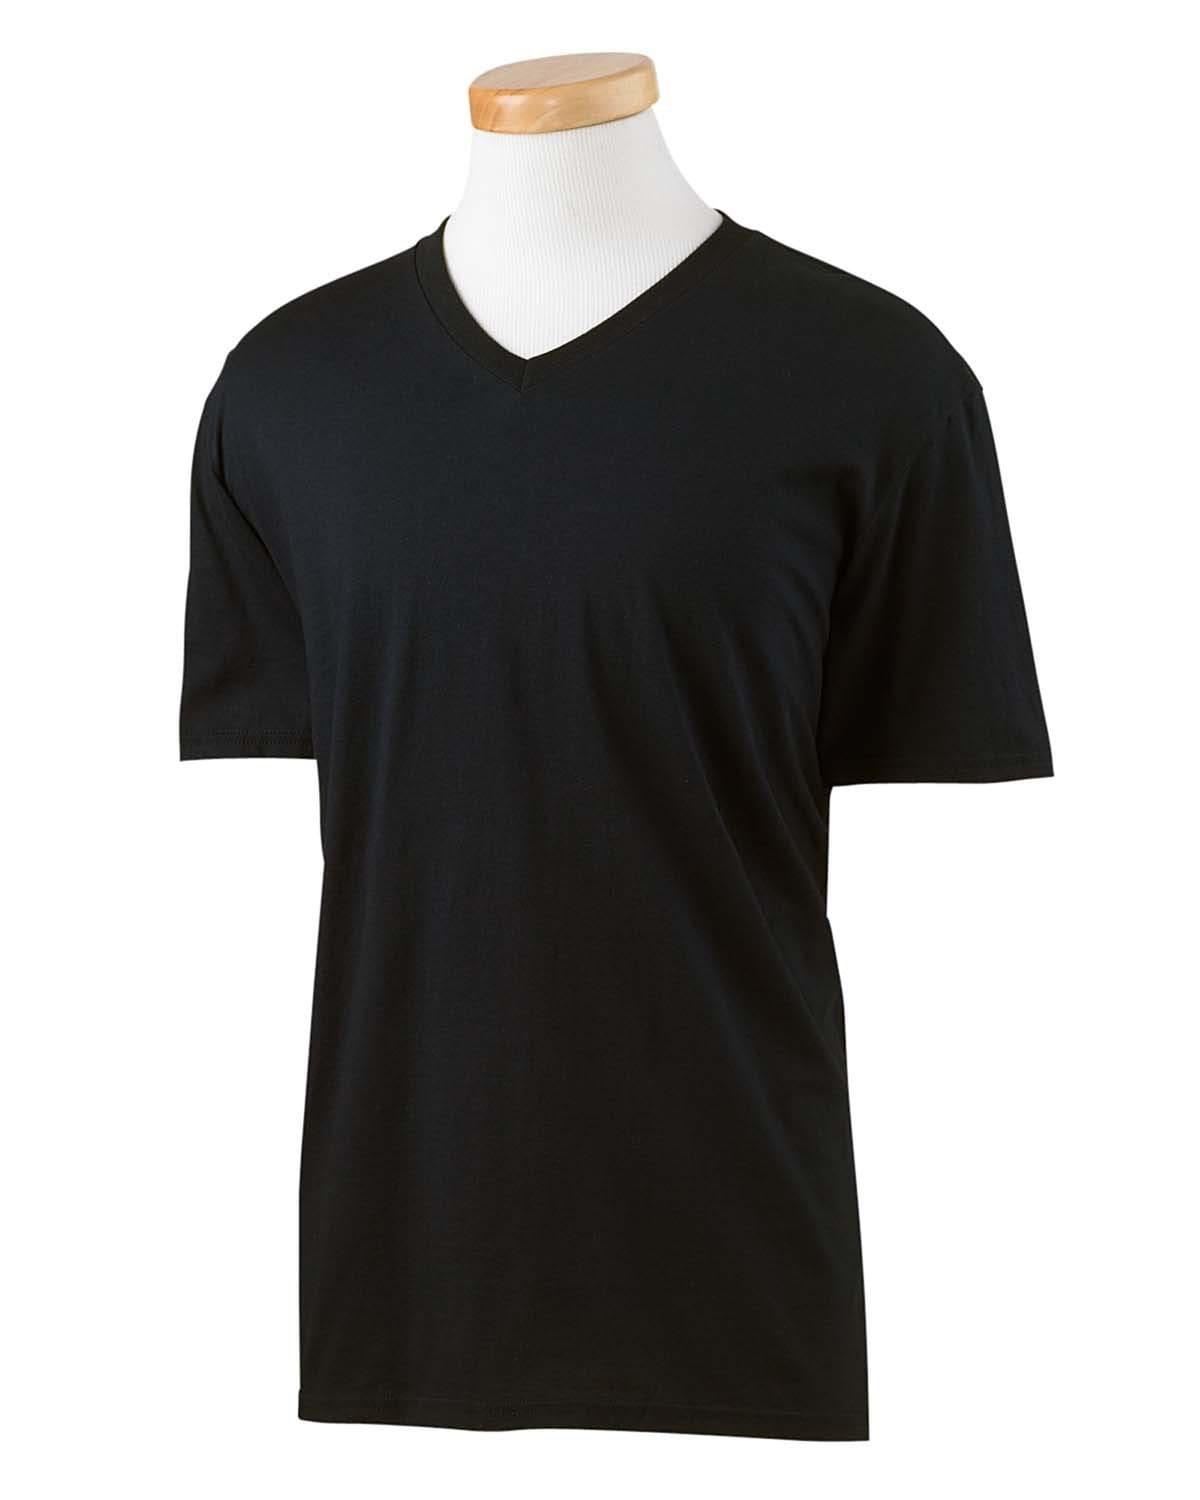 g64v-adult-softstyle-4-5-oz-v-neck-t-shirt-XSmall-BLACK-Oasispromos